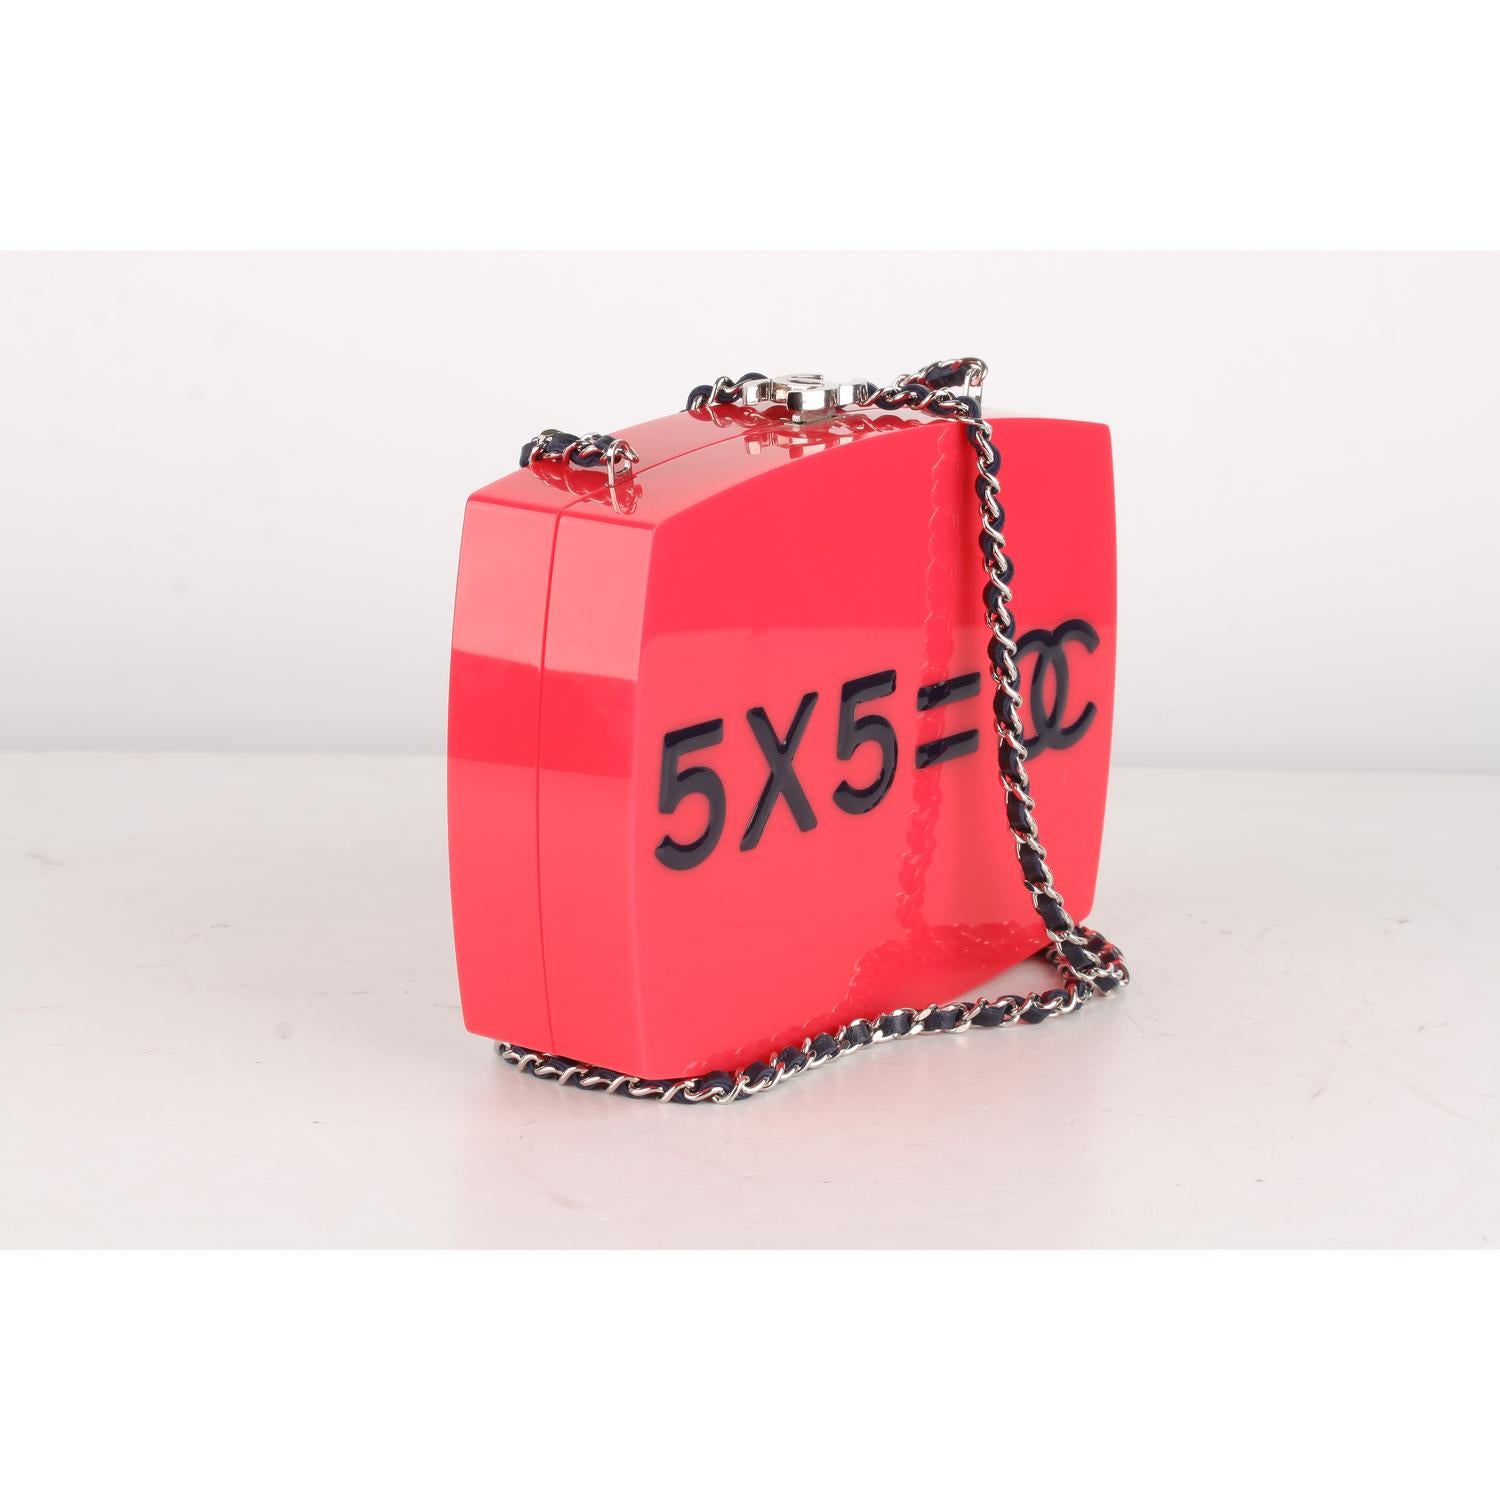 Women's Chanel 2015 Je Ne Suis Pas En Solde Box Clutch with Chain Strap